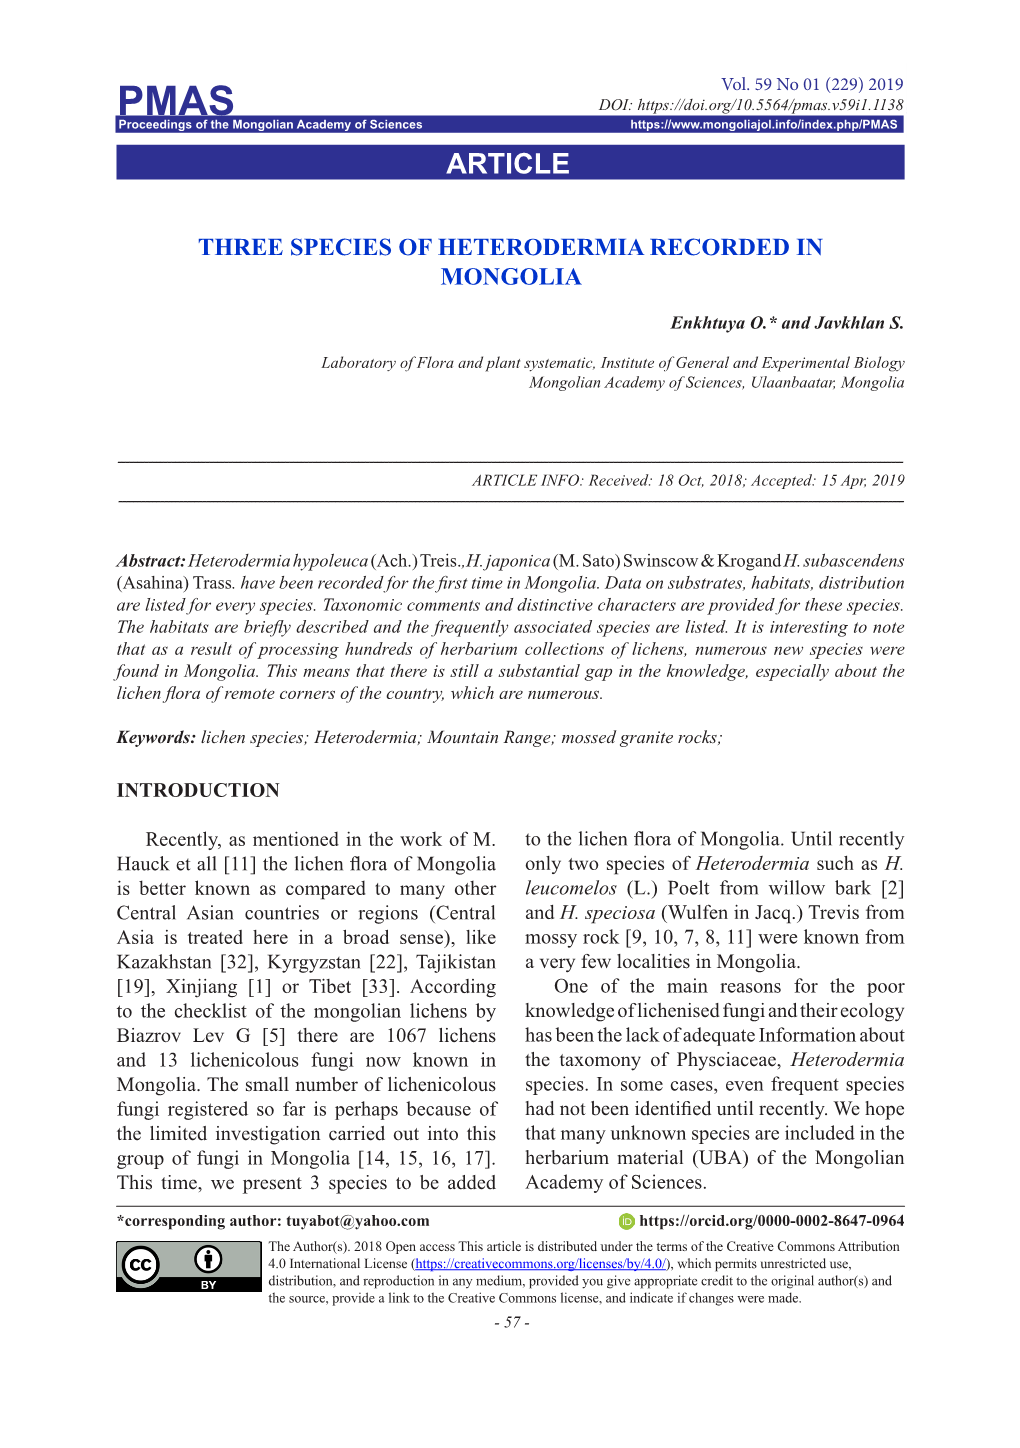 Pmas.V59i1.1138 Pmasproceedings of the Mongolian Academy of Sciences ARTICLE